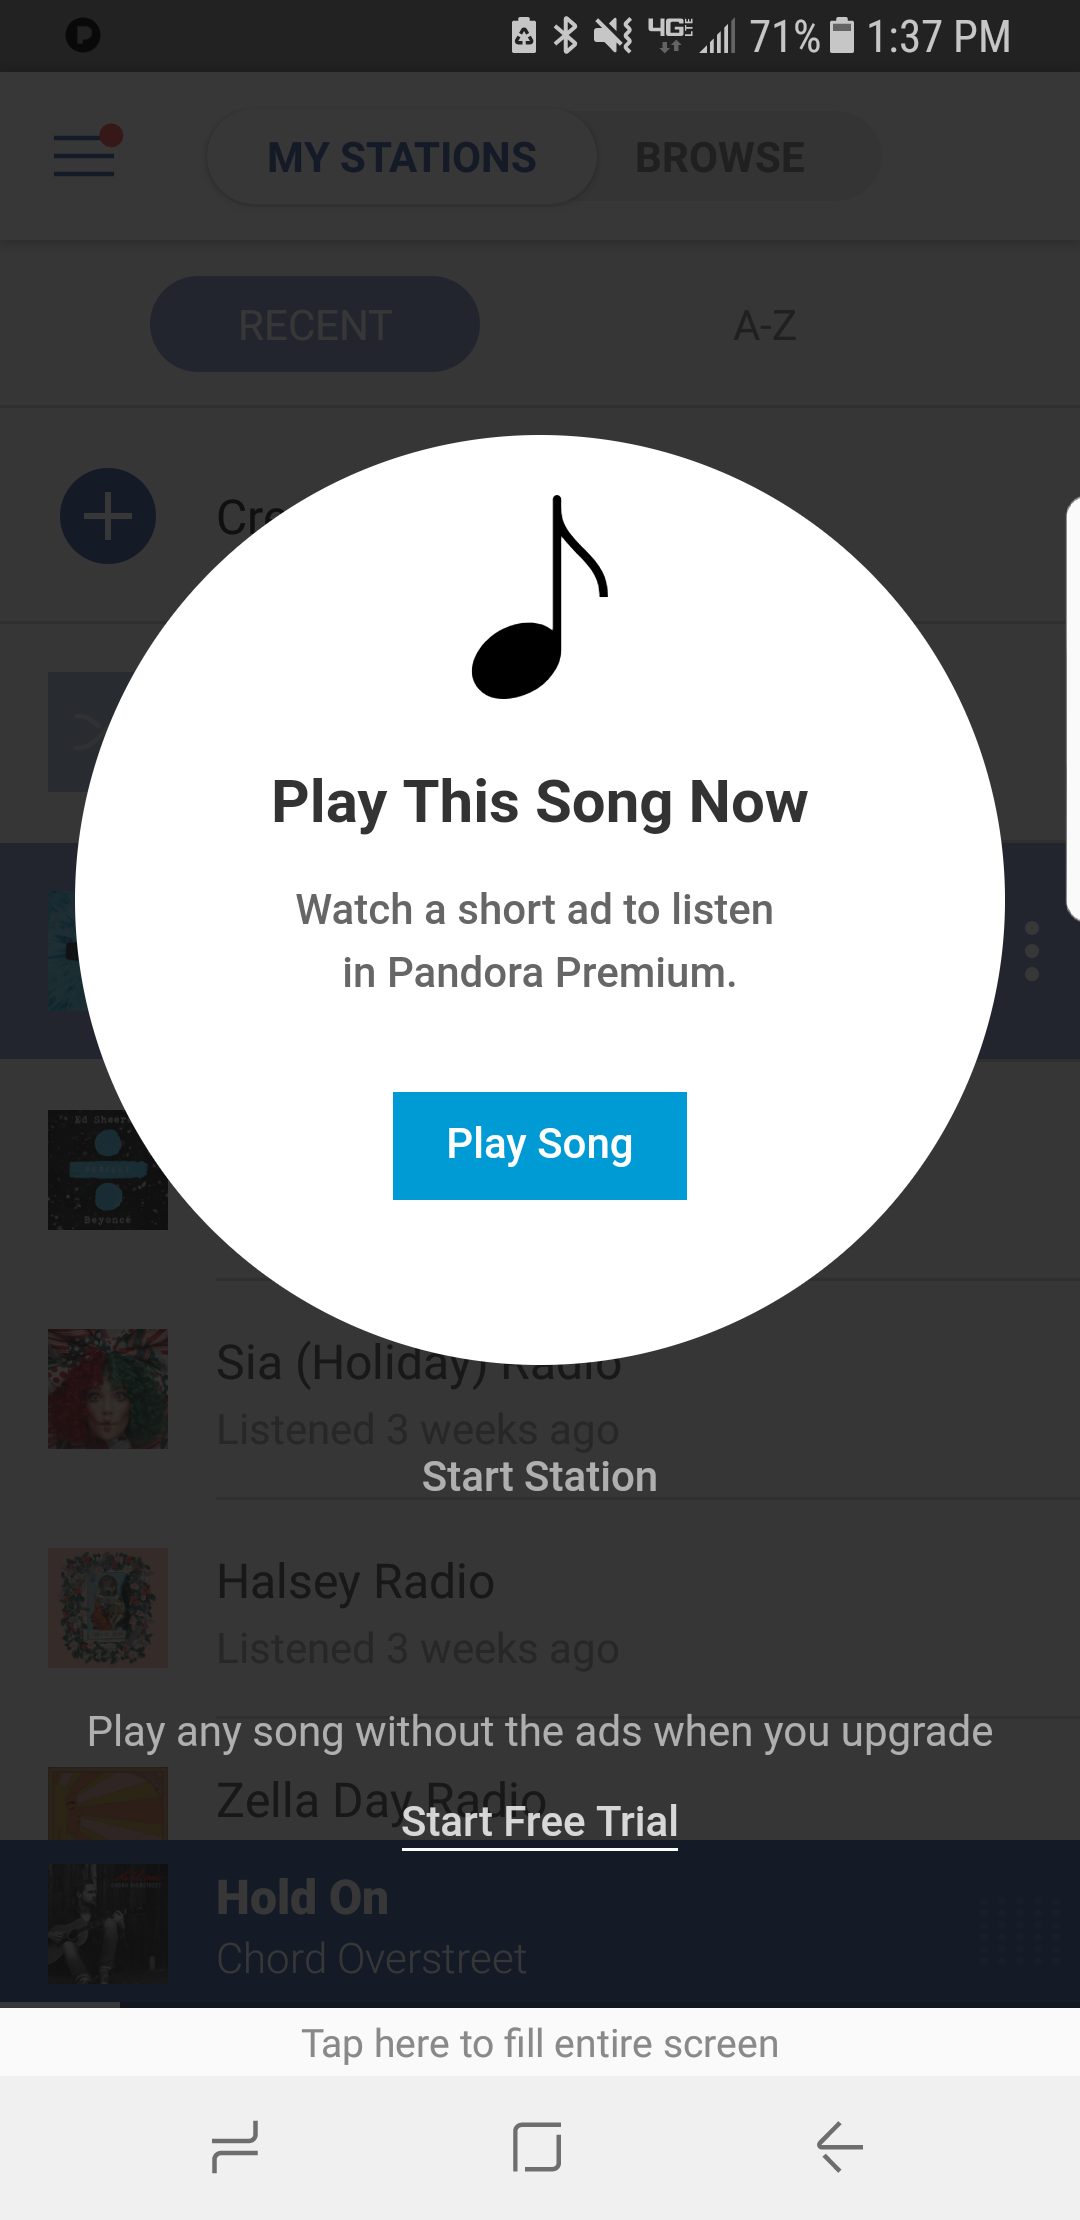 Pandora listening experience